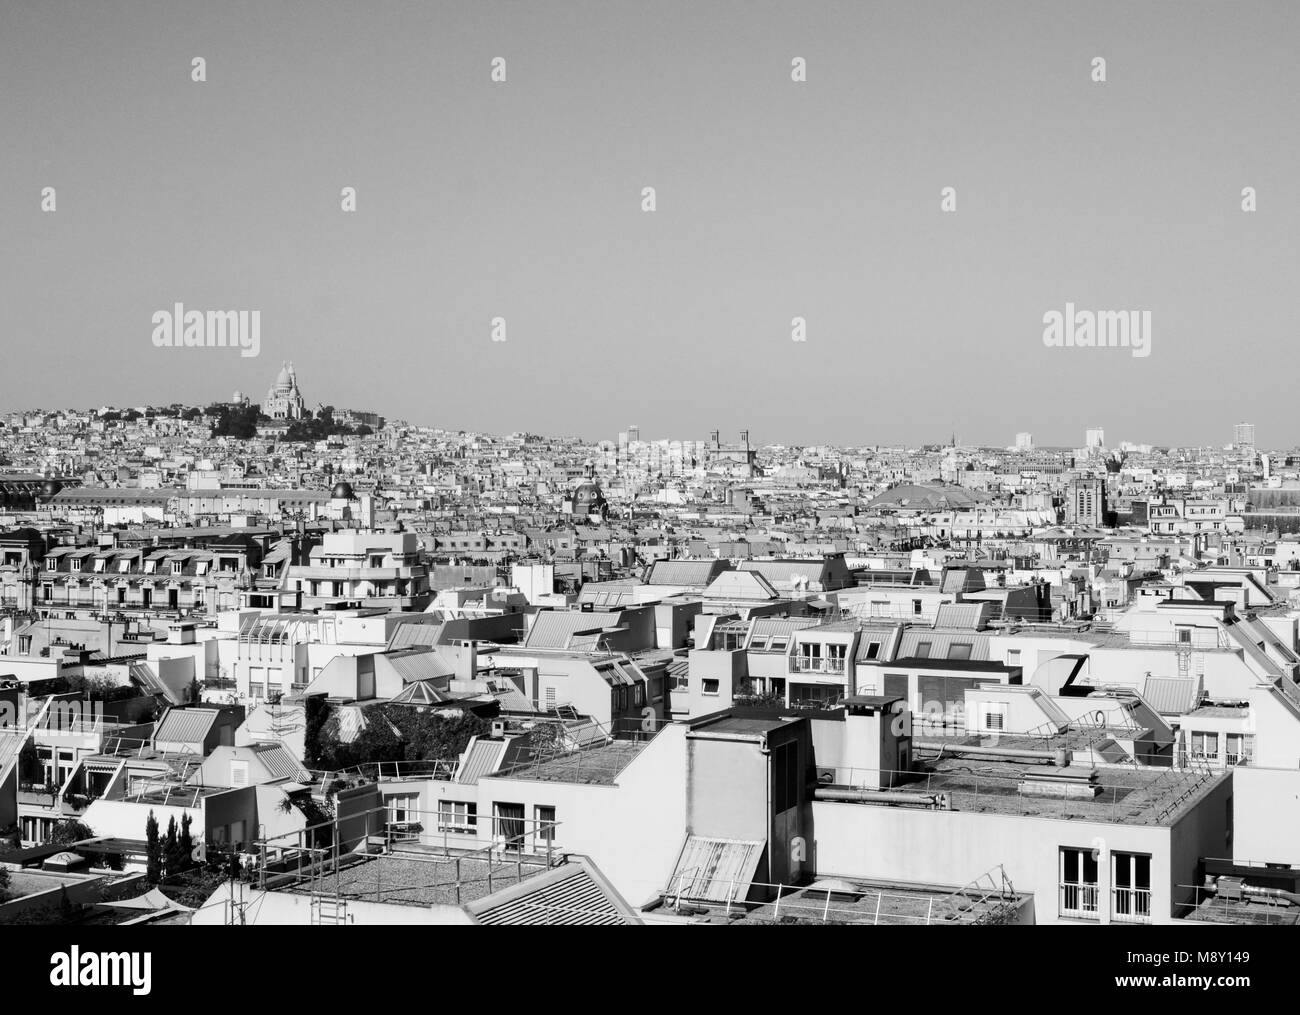 Parisian architecture Black and White Stock Photos & Images - Alamy